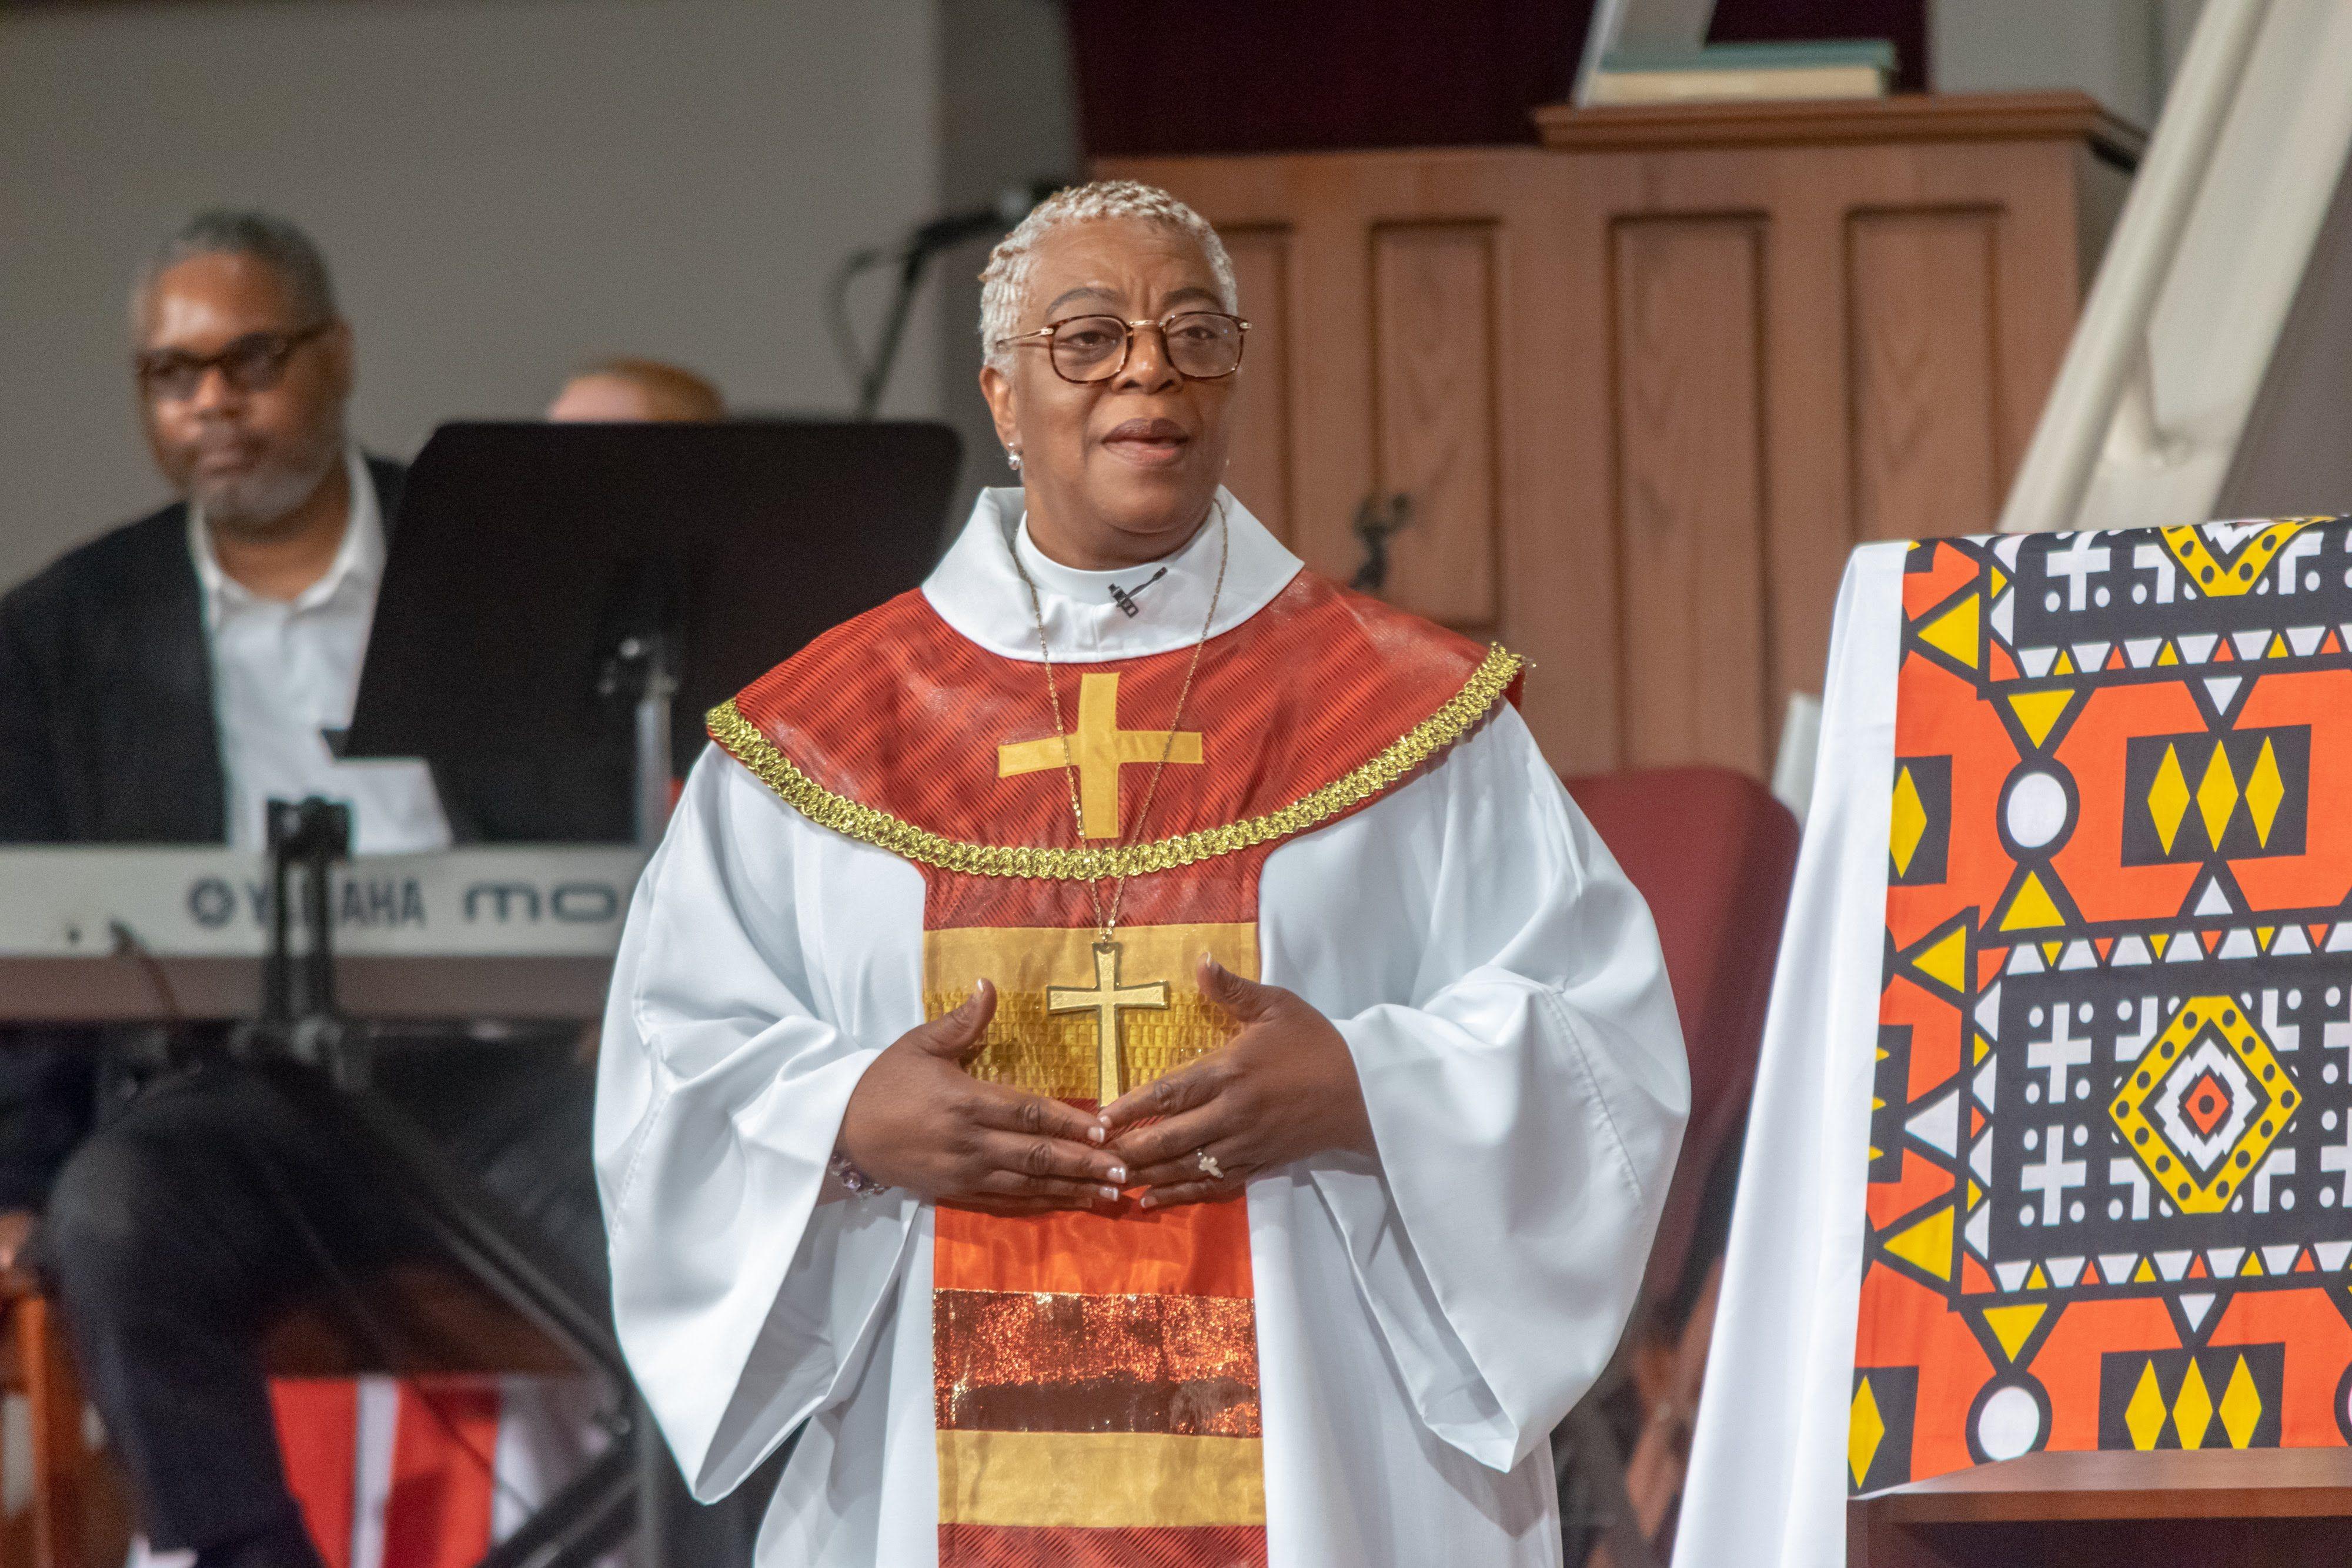 Patricia Davenport ist Bischöfin der Southeastern Pennsylvania Synod in der ELKA. Foto: Bob Fisher-SEPAComm